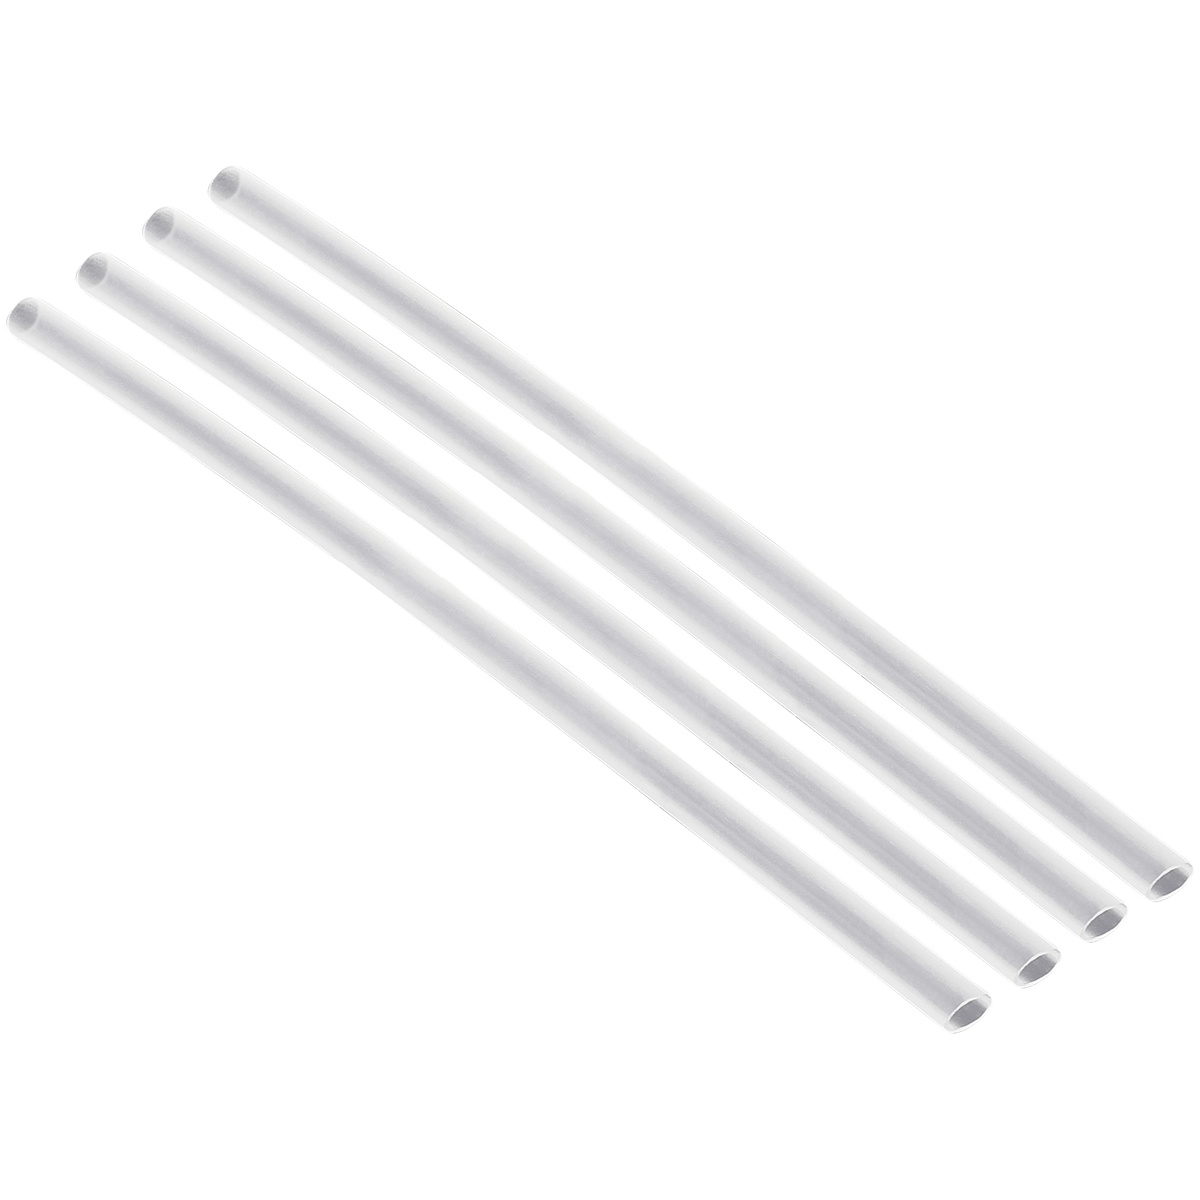 The Iceflow™ Flip Straws | 0.89L | 4-pack